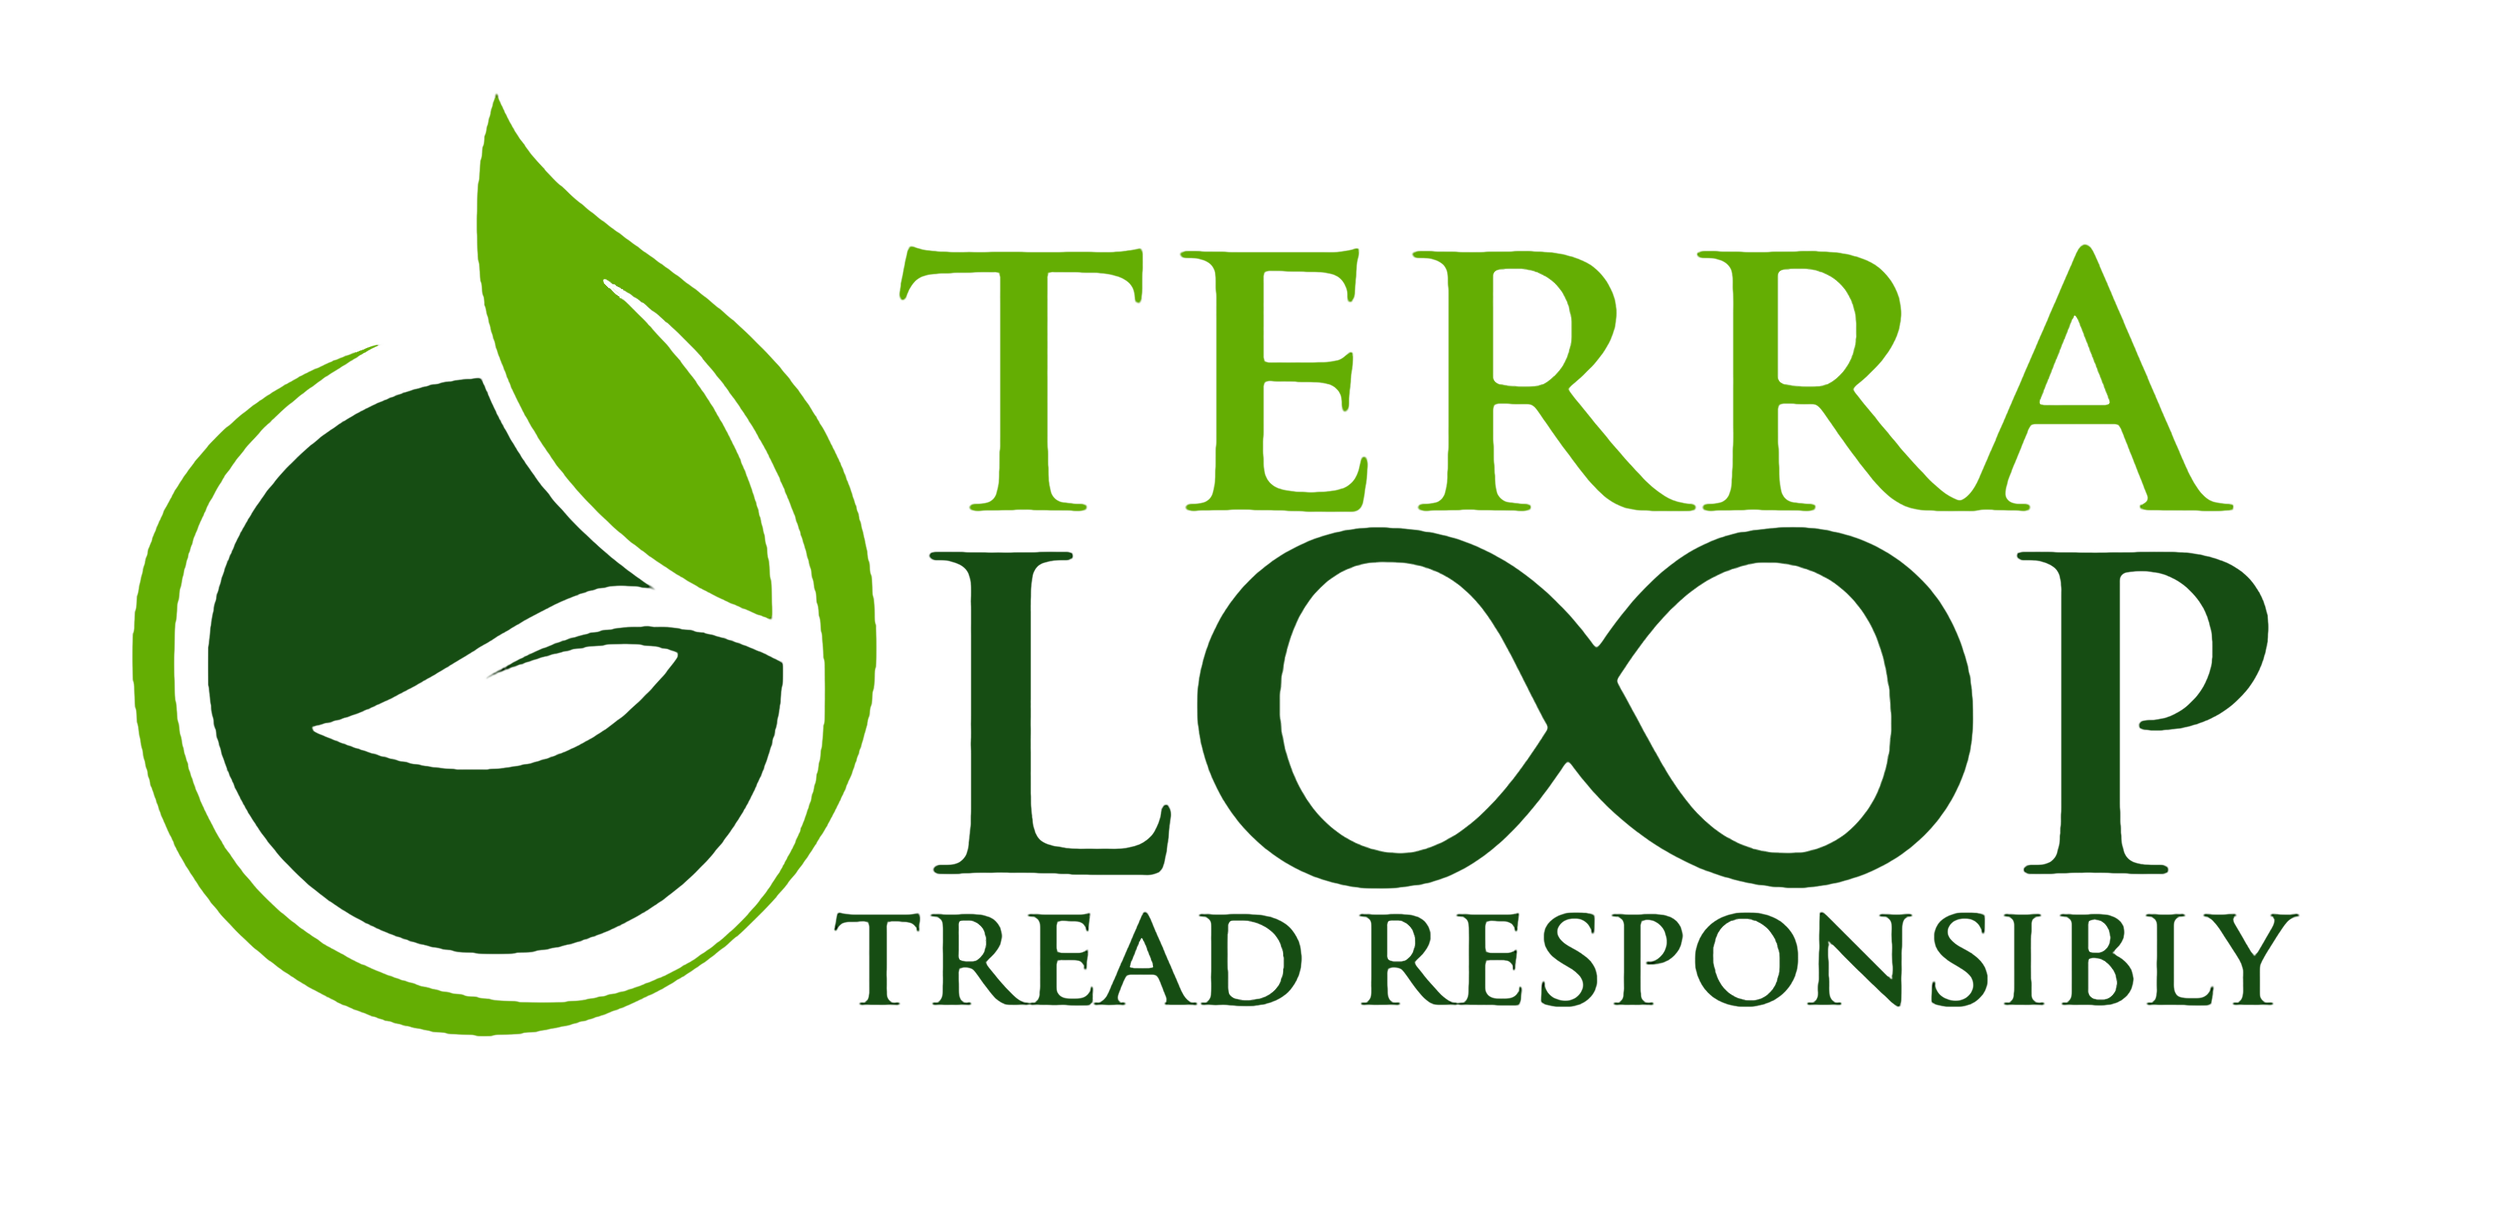 TerraLoop Environmental Consulting